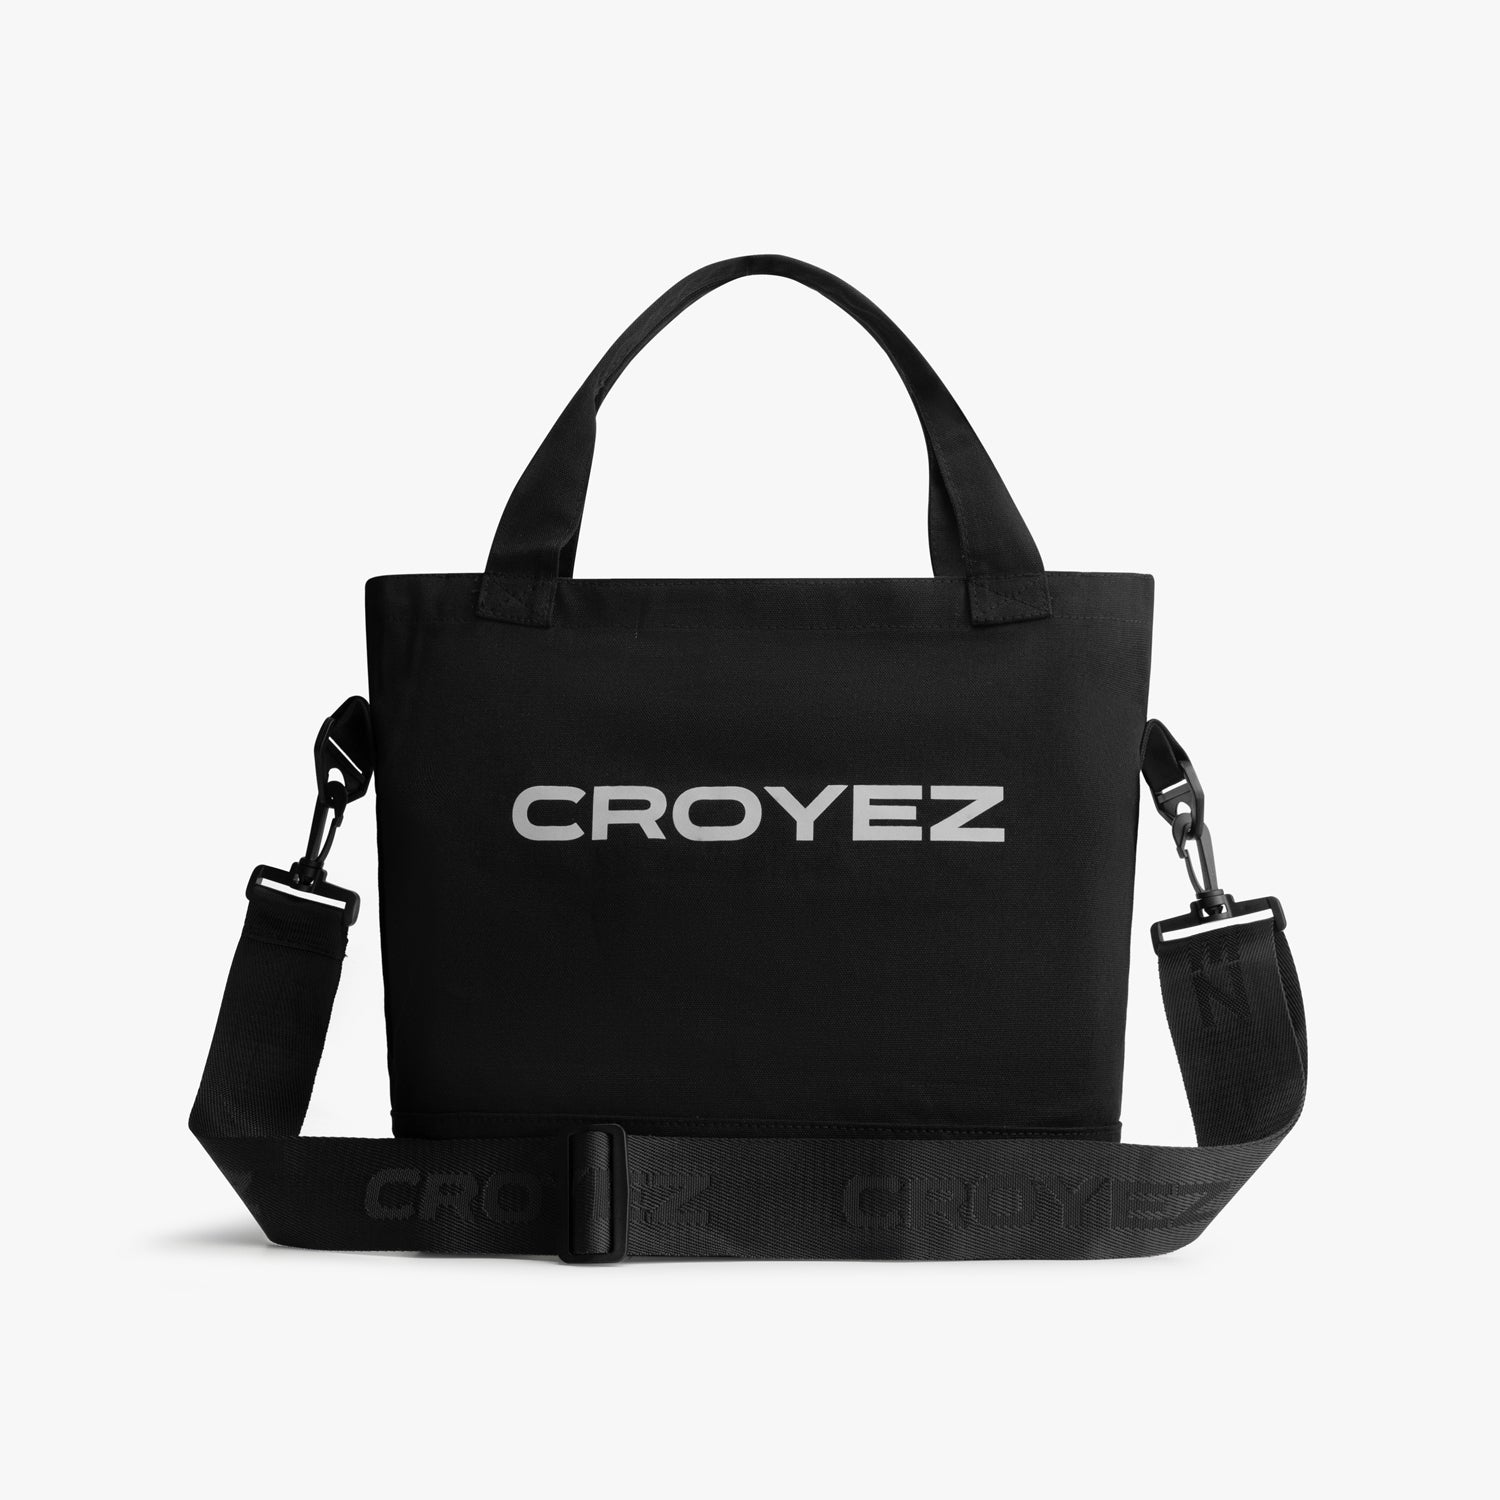 CROYEZ SMALL SHOPPER - BLACK/WHITE